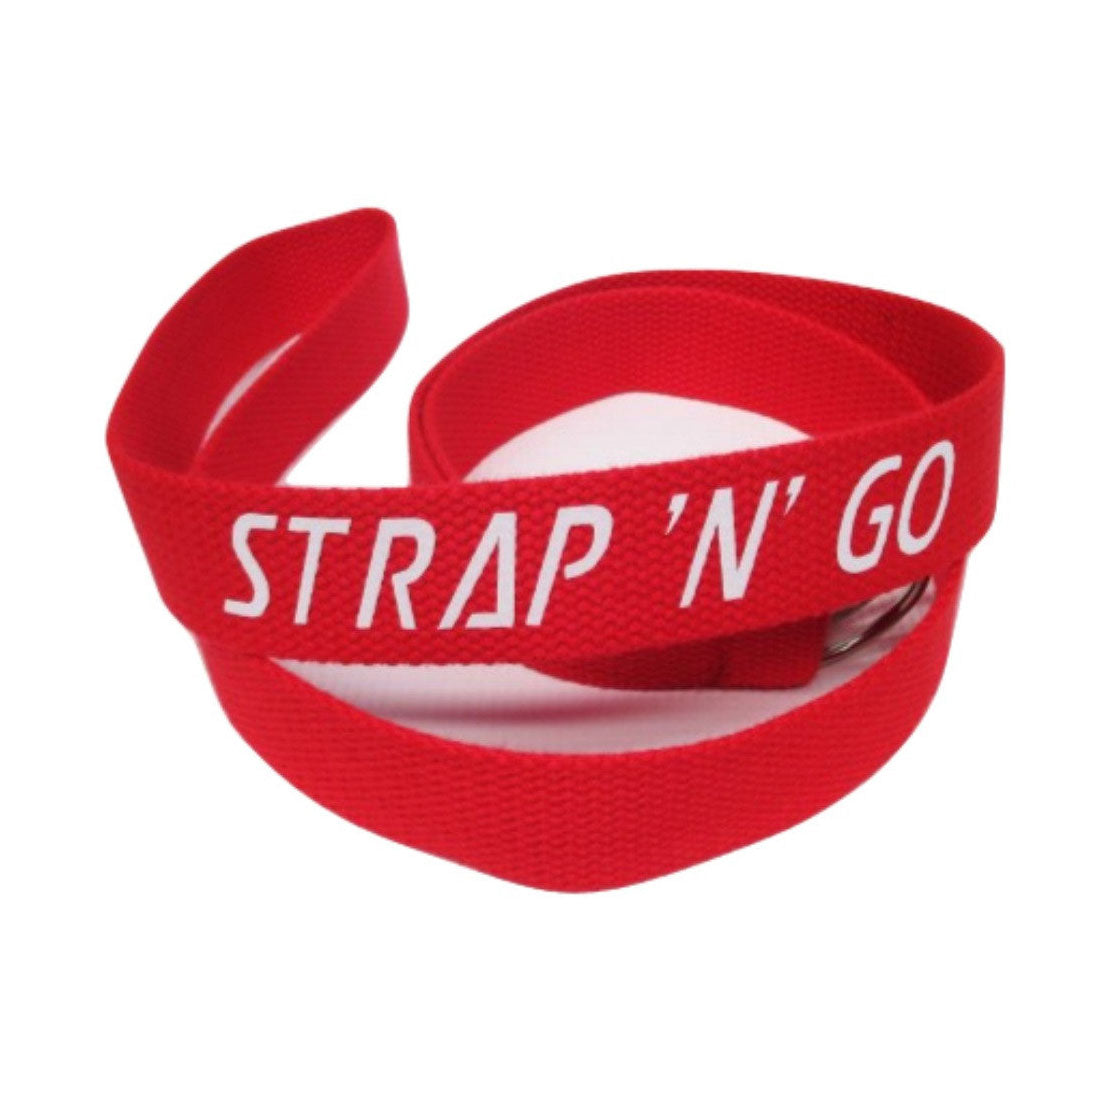 Strap N Go Skate Noose/Leash - Solid Colours Red Roller Skate Accessories